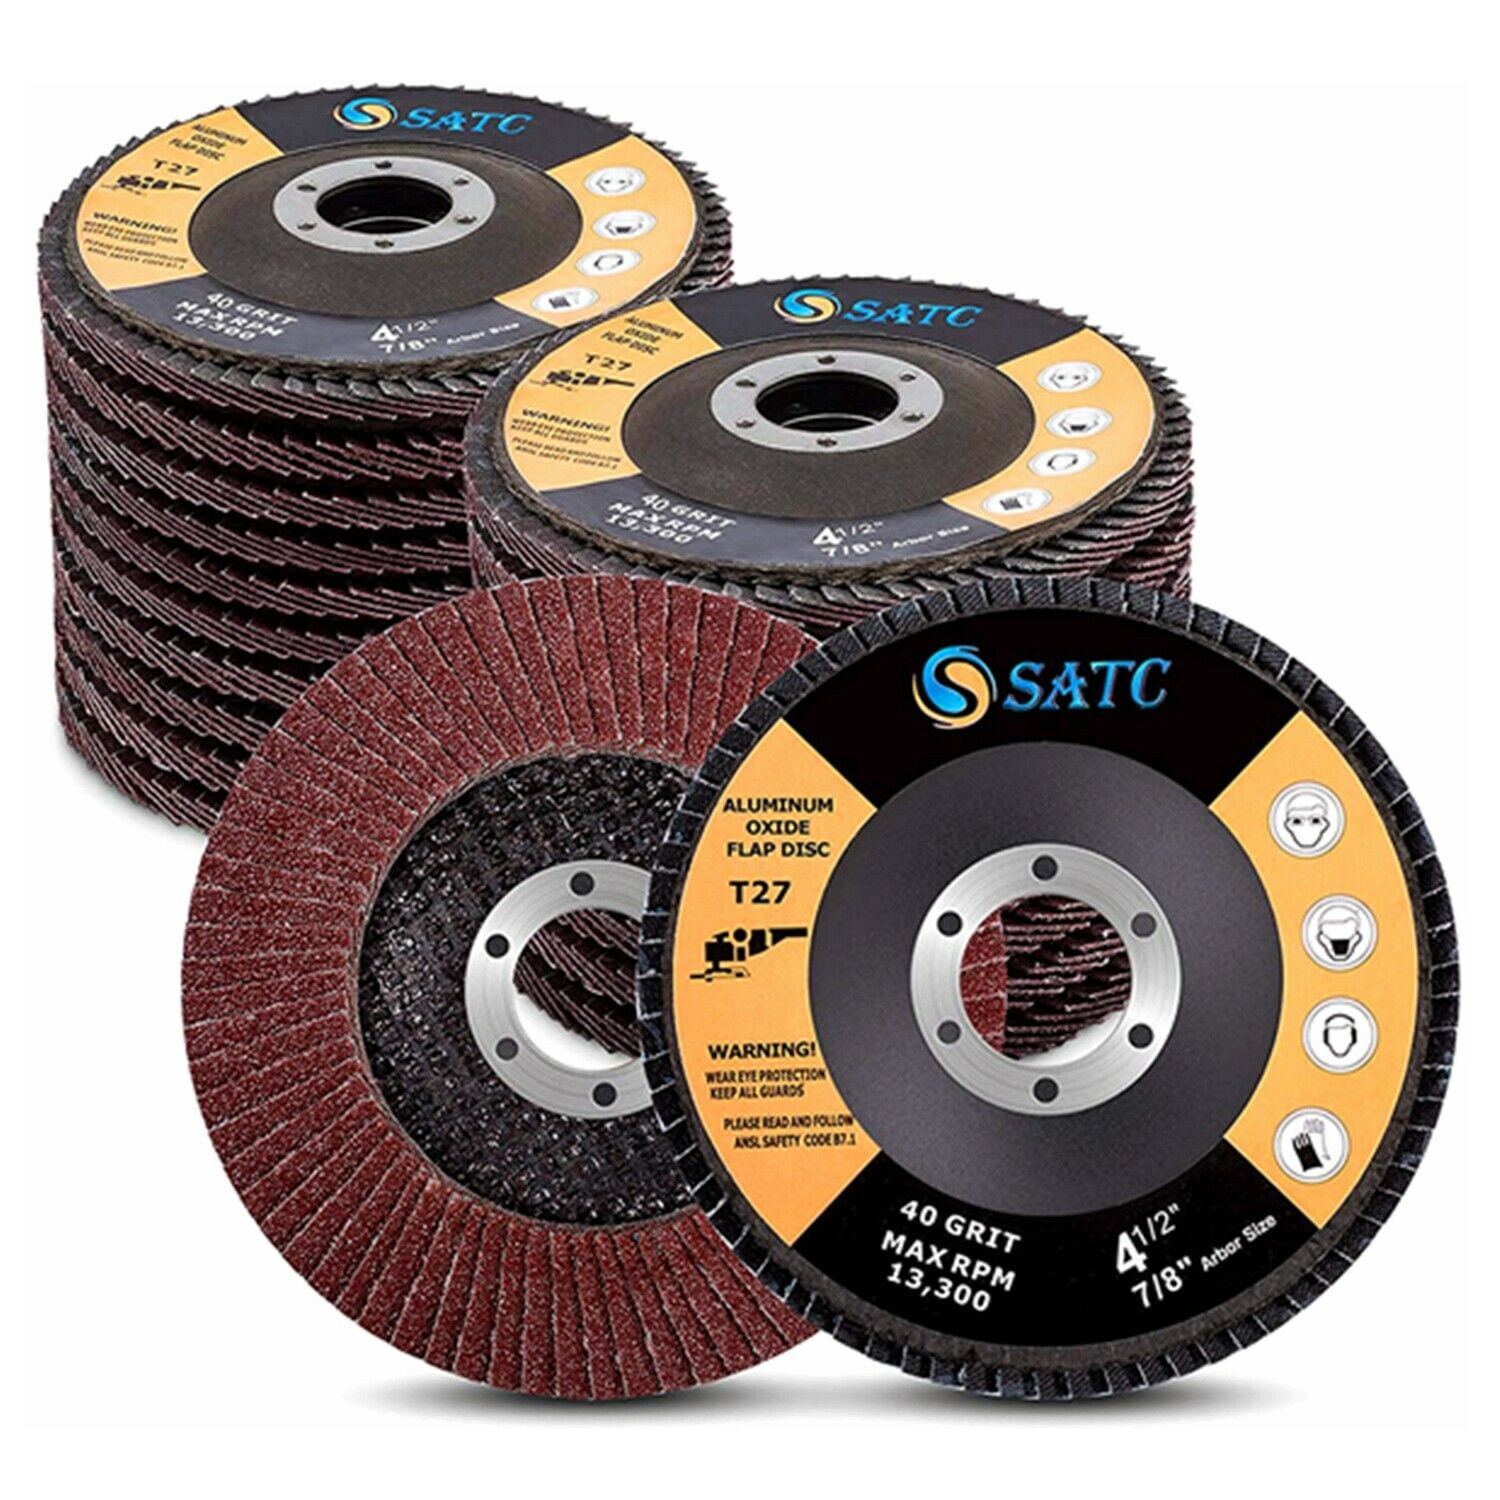 20 New 4.5 60 Grit Flat Flap Disc Neiko Aluminum Oxide Grinding Sanding Wheels